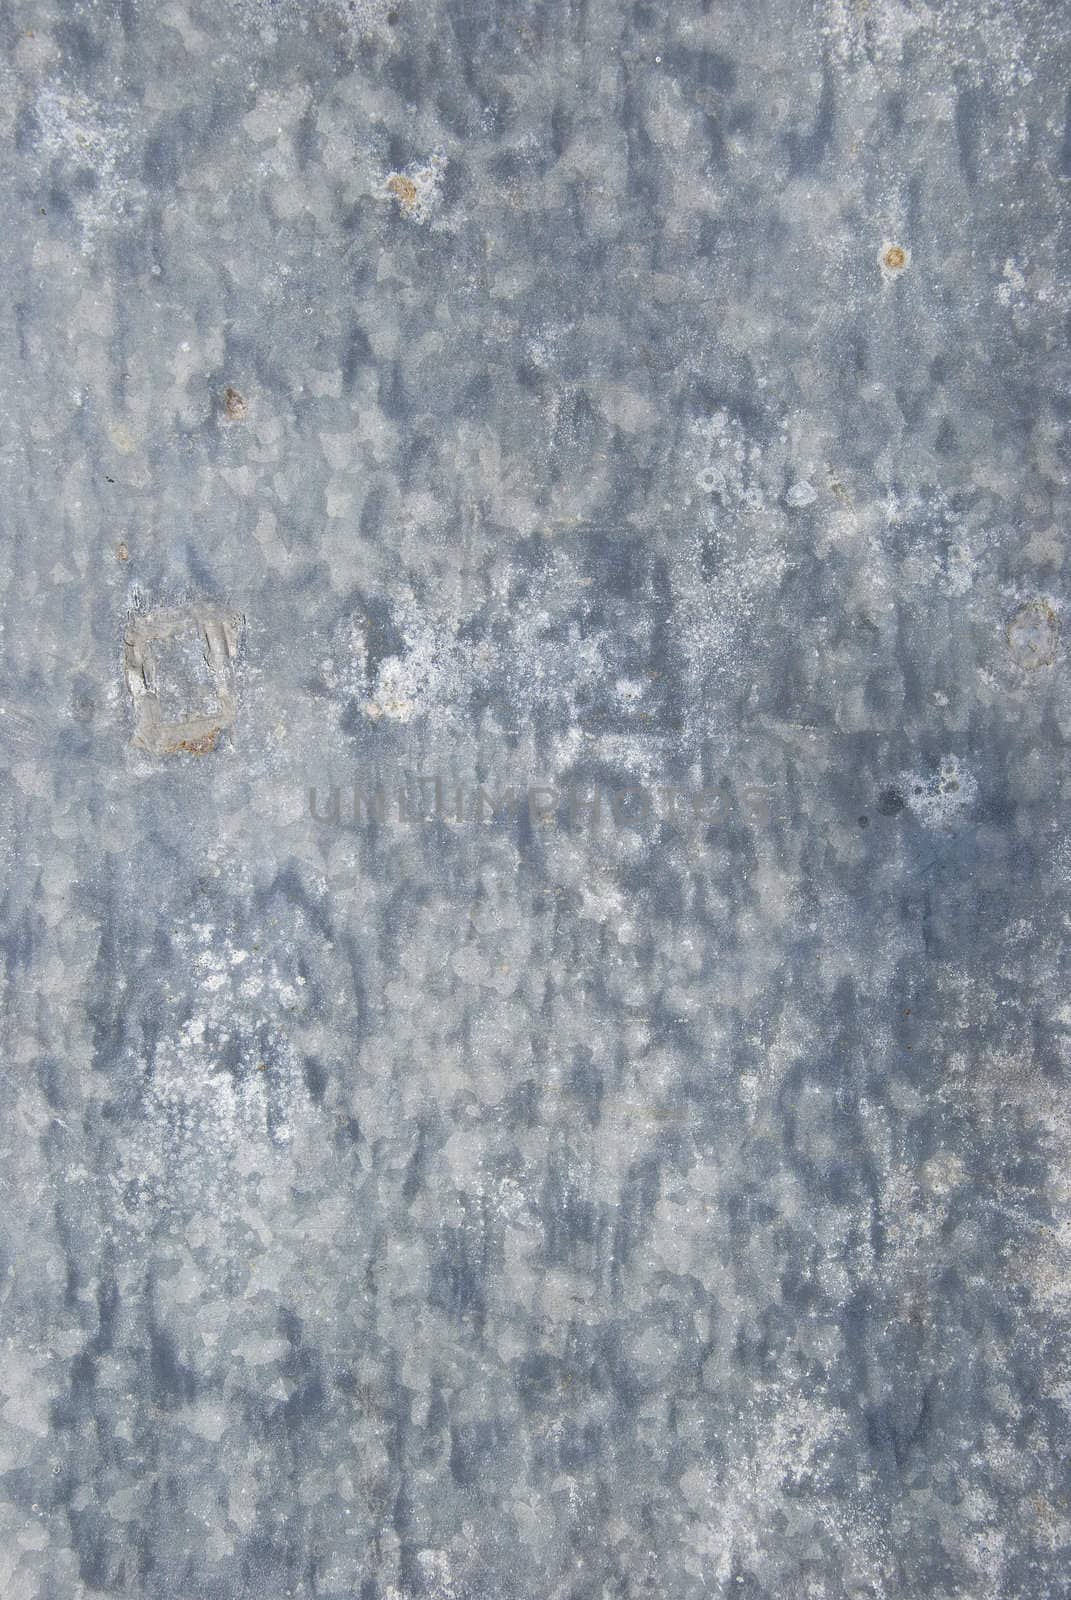 Old galvanized sheet of metal - original background